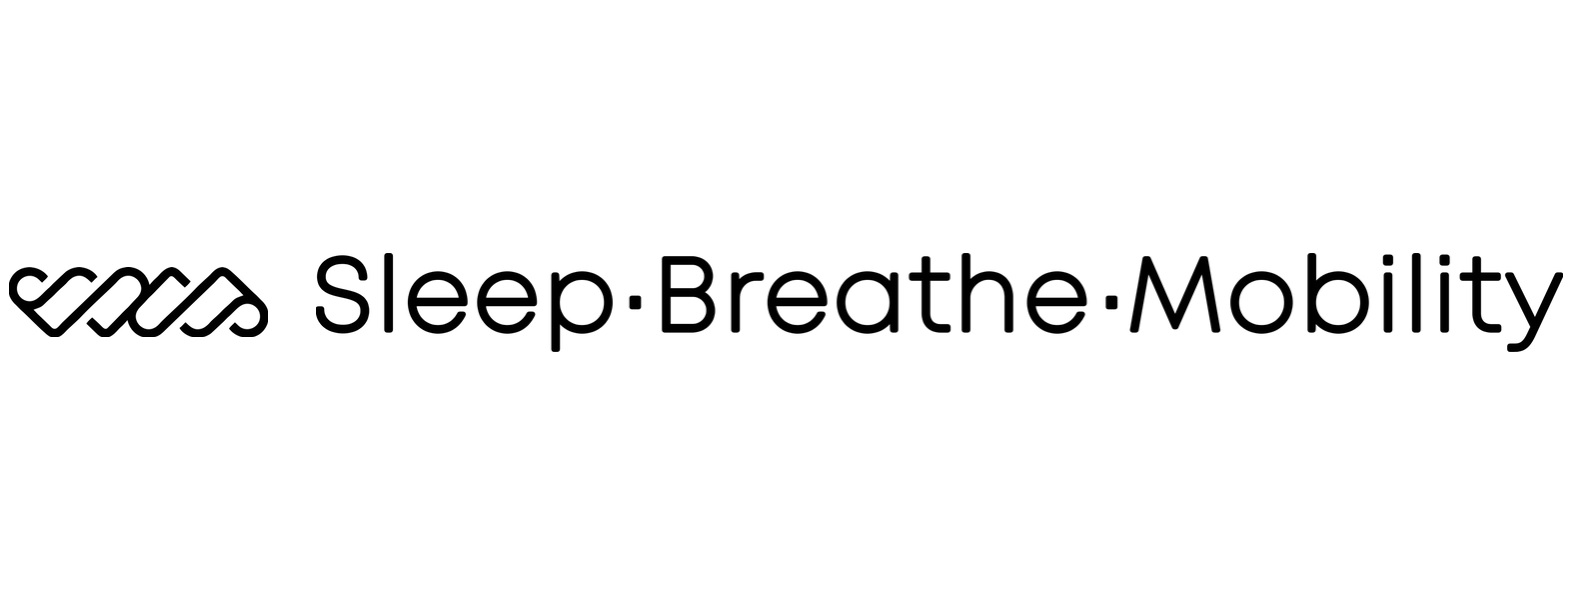 Sleep Breathe Mobility